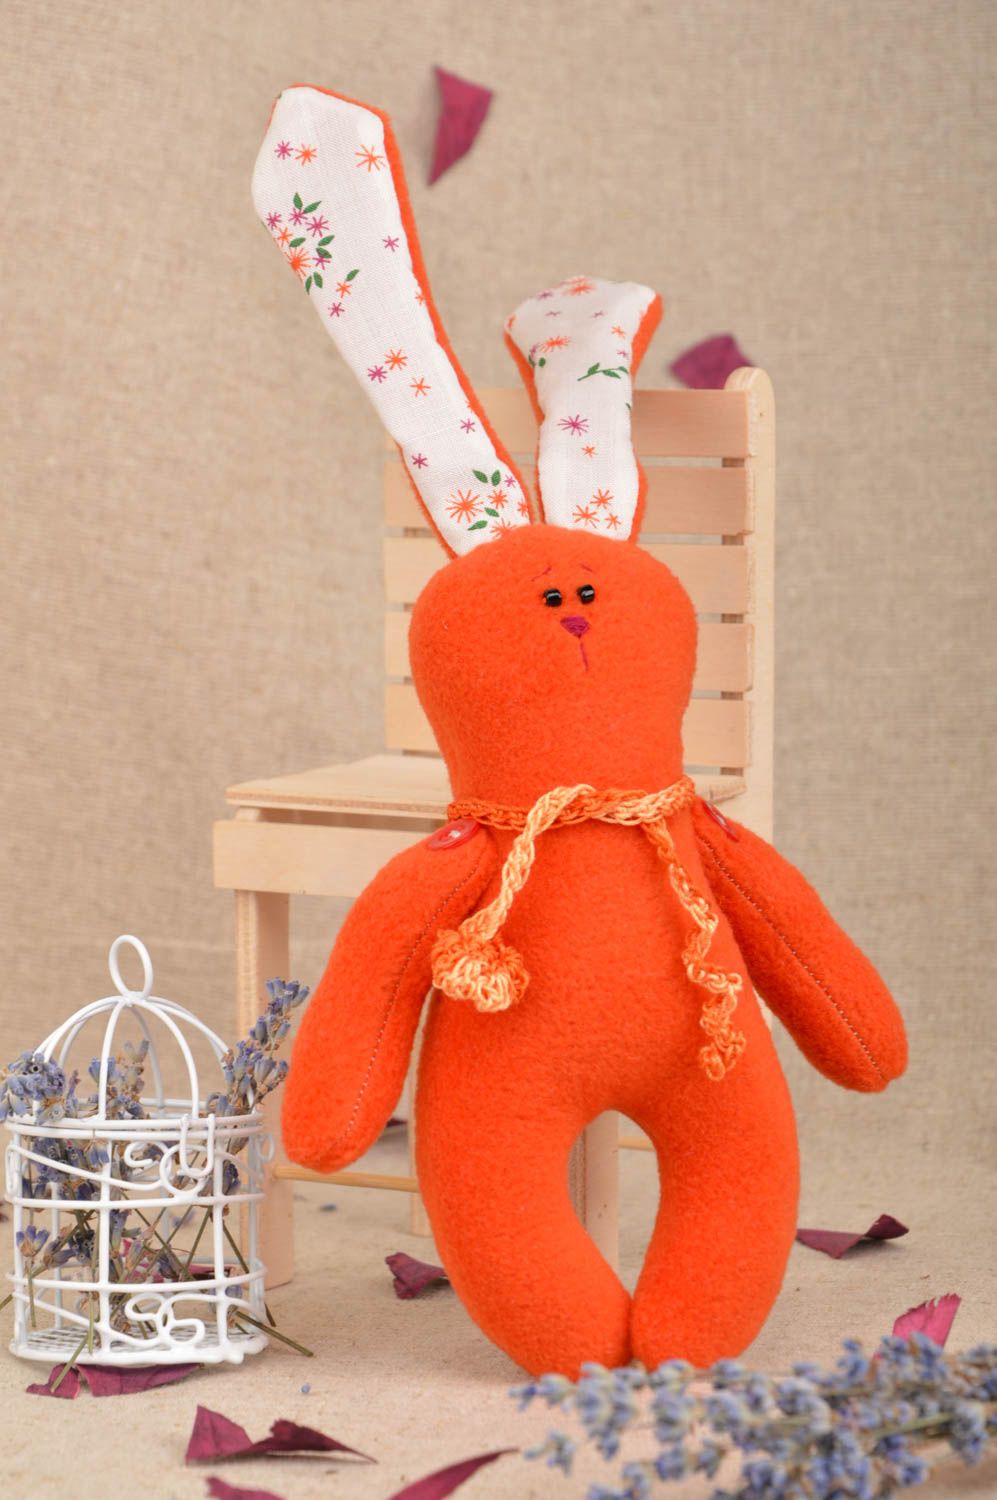 Beautiful handmade fleece fabric toy childrens soft toy stuffed toy gift ideas photo 1